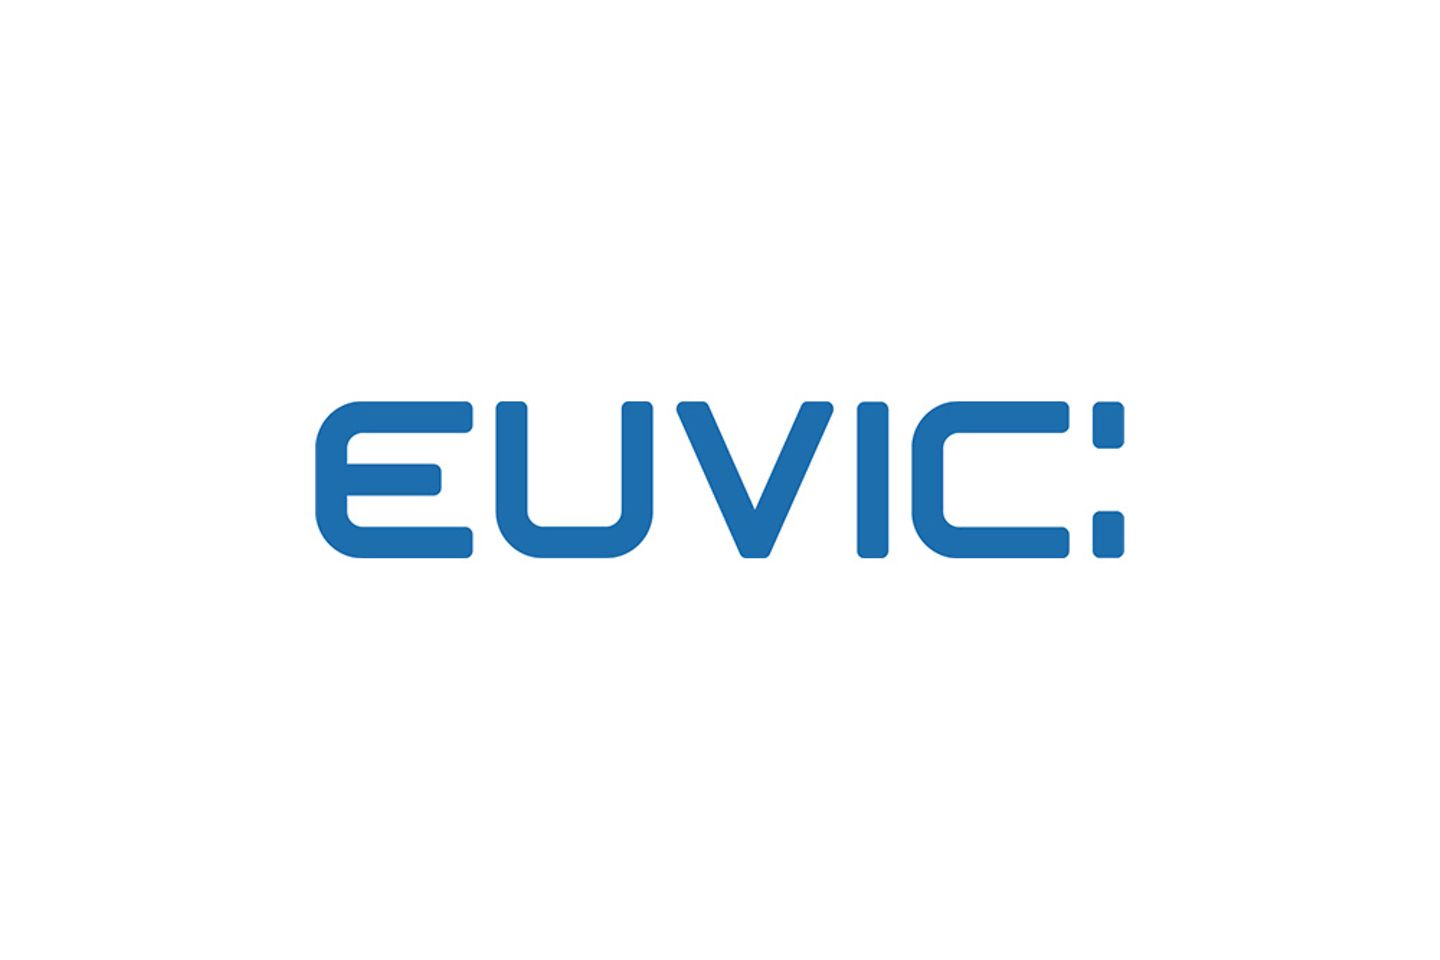 EUVIC logo